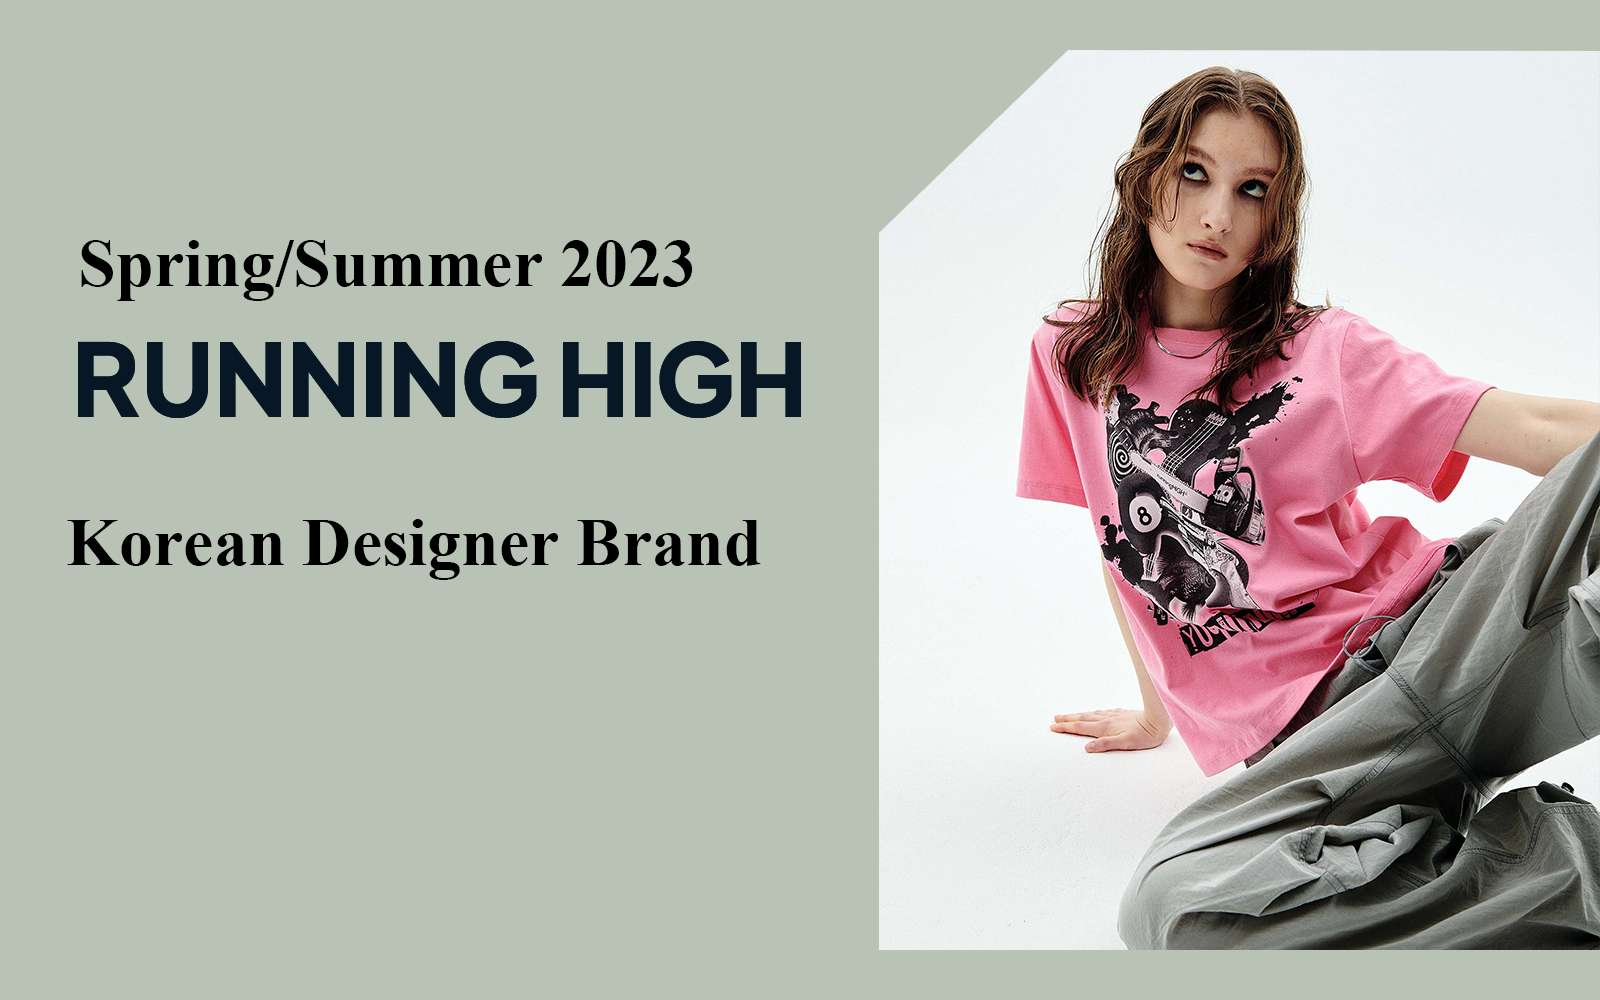 Rebellious Girl -- The Analysis of RUNNING HIGH The Womenswear Designer Brand